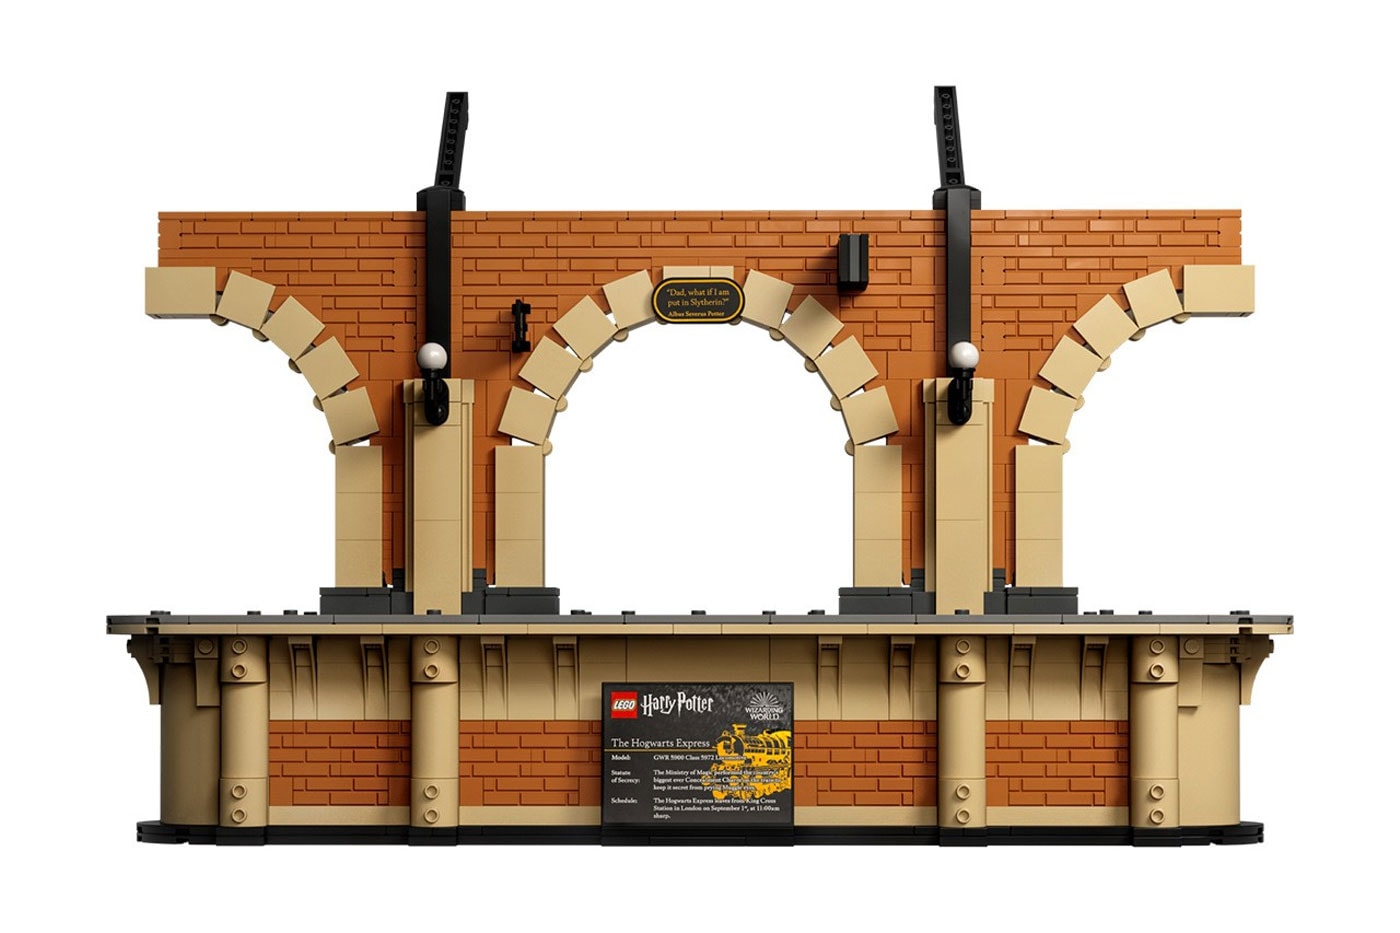 LEGO 正式發佈《Harry Potter》霍格華茲特快列車 Hogwarts Express 積木套組